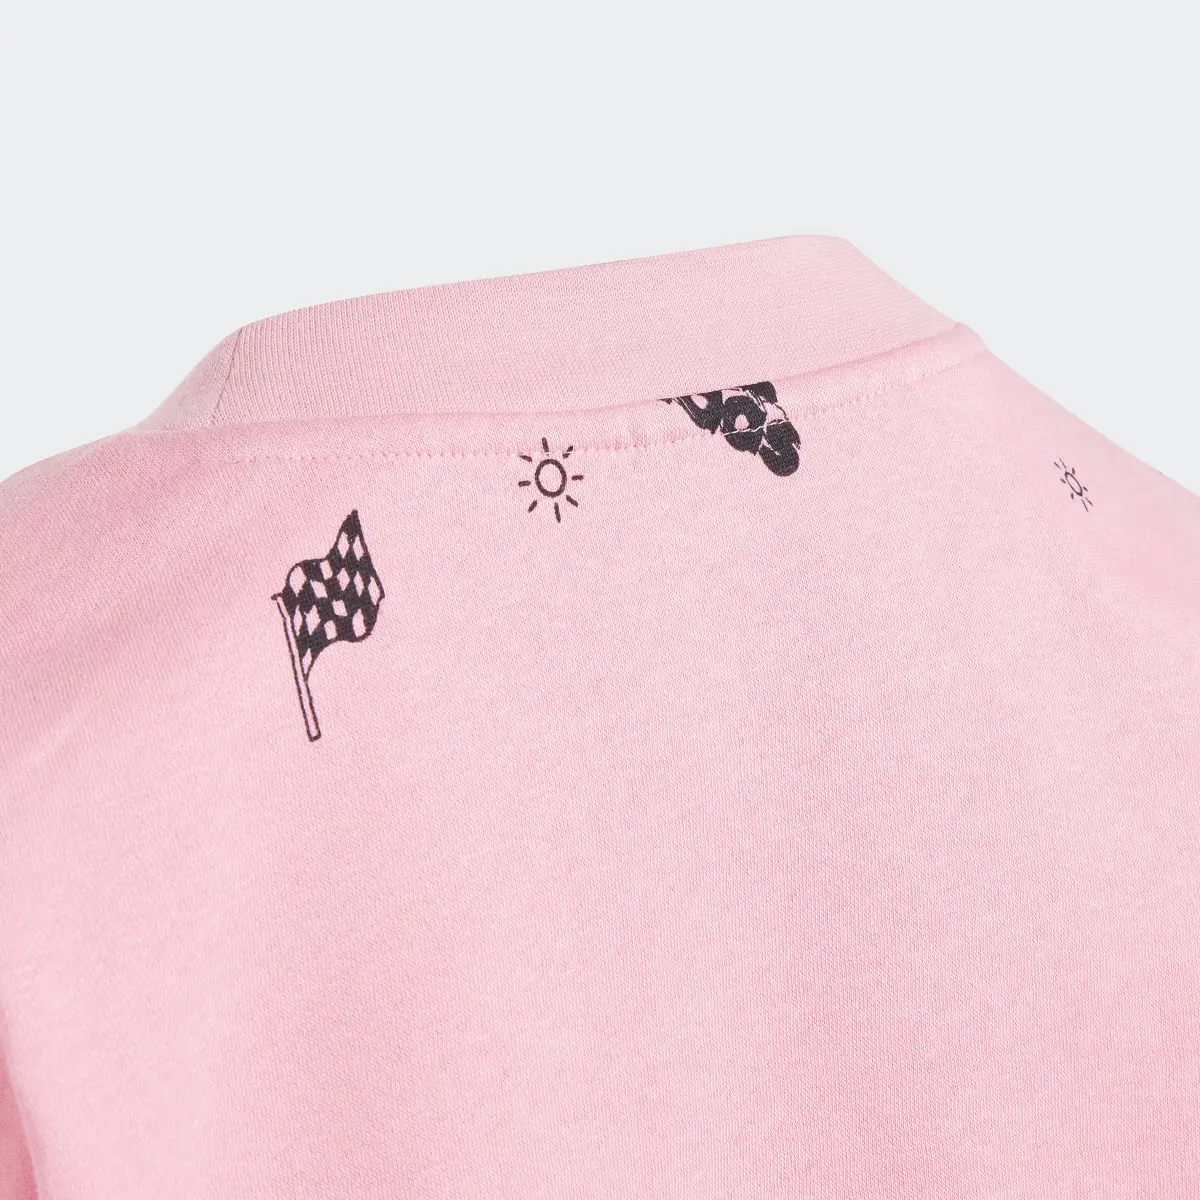 Adidas Sweatshirt Brand Love – Criança. 3